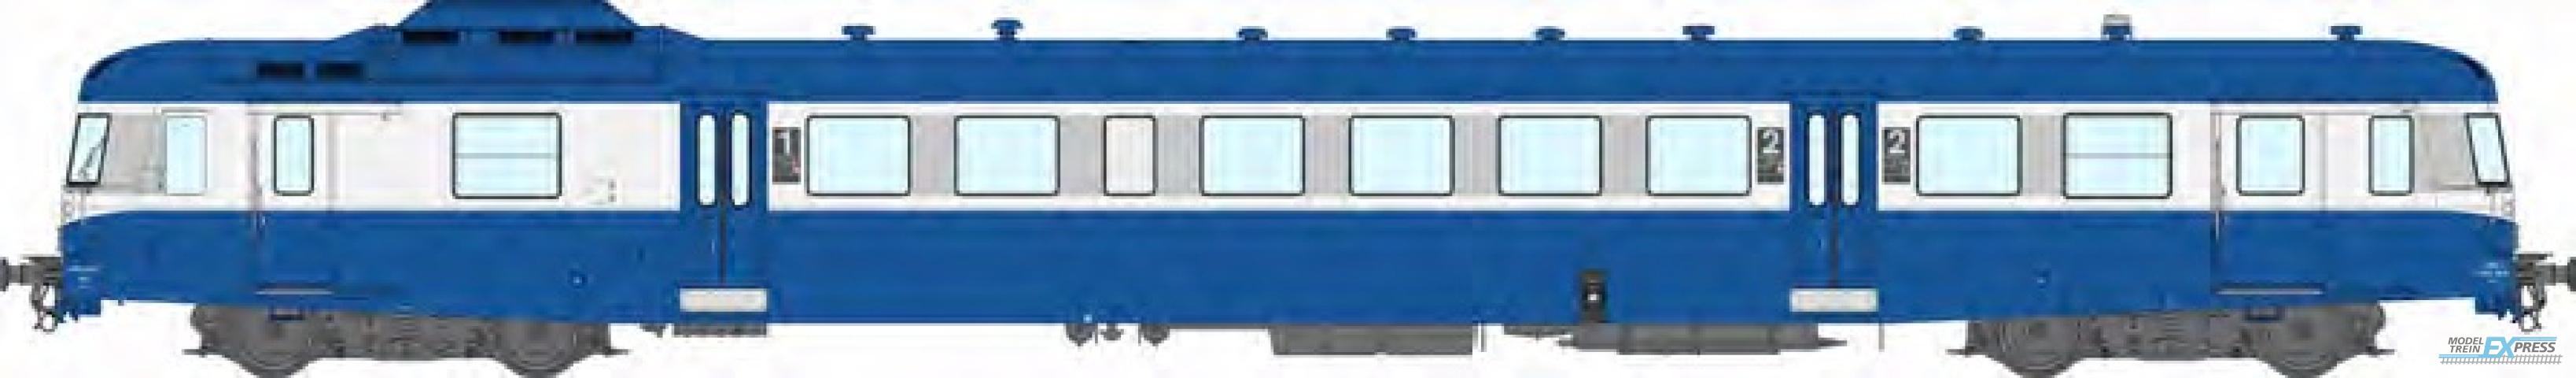 REE models MB-164 X 2805 modernized, Blue, spagetti logo, LIMOGES, SNCF Era V-VI - ANALOG